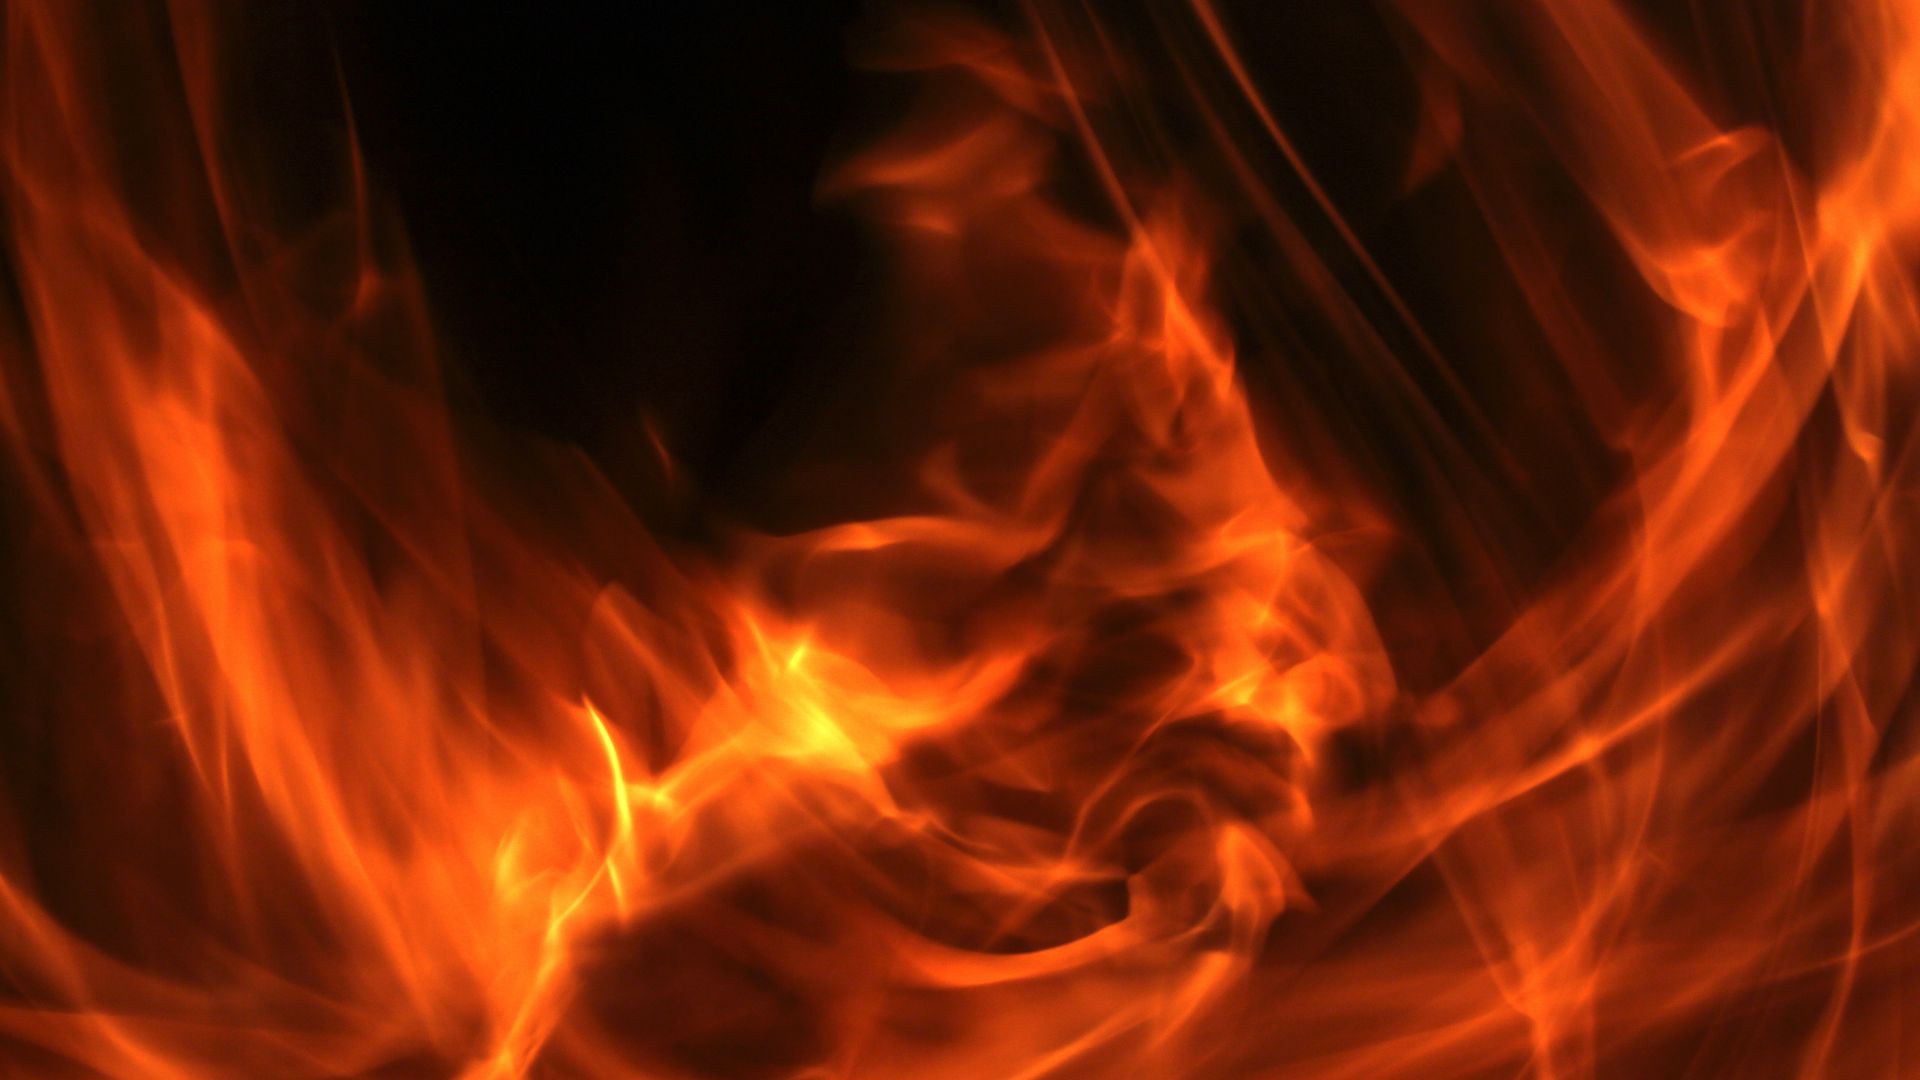 Download wallpaper 1920x1080 fire, flame, black, bonfire full hd, hdtv,  fhd, 1080p hd background